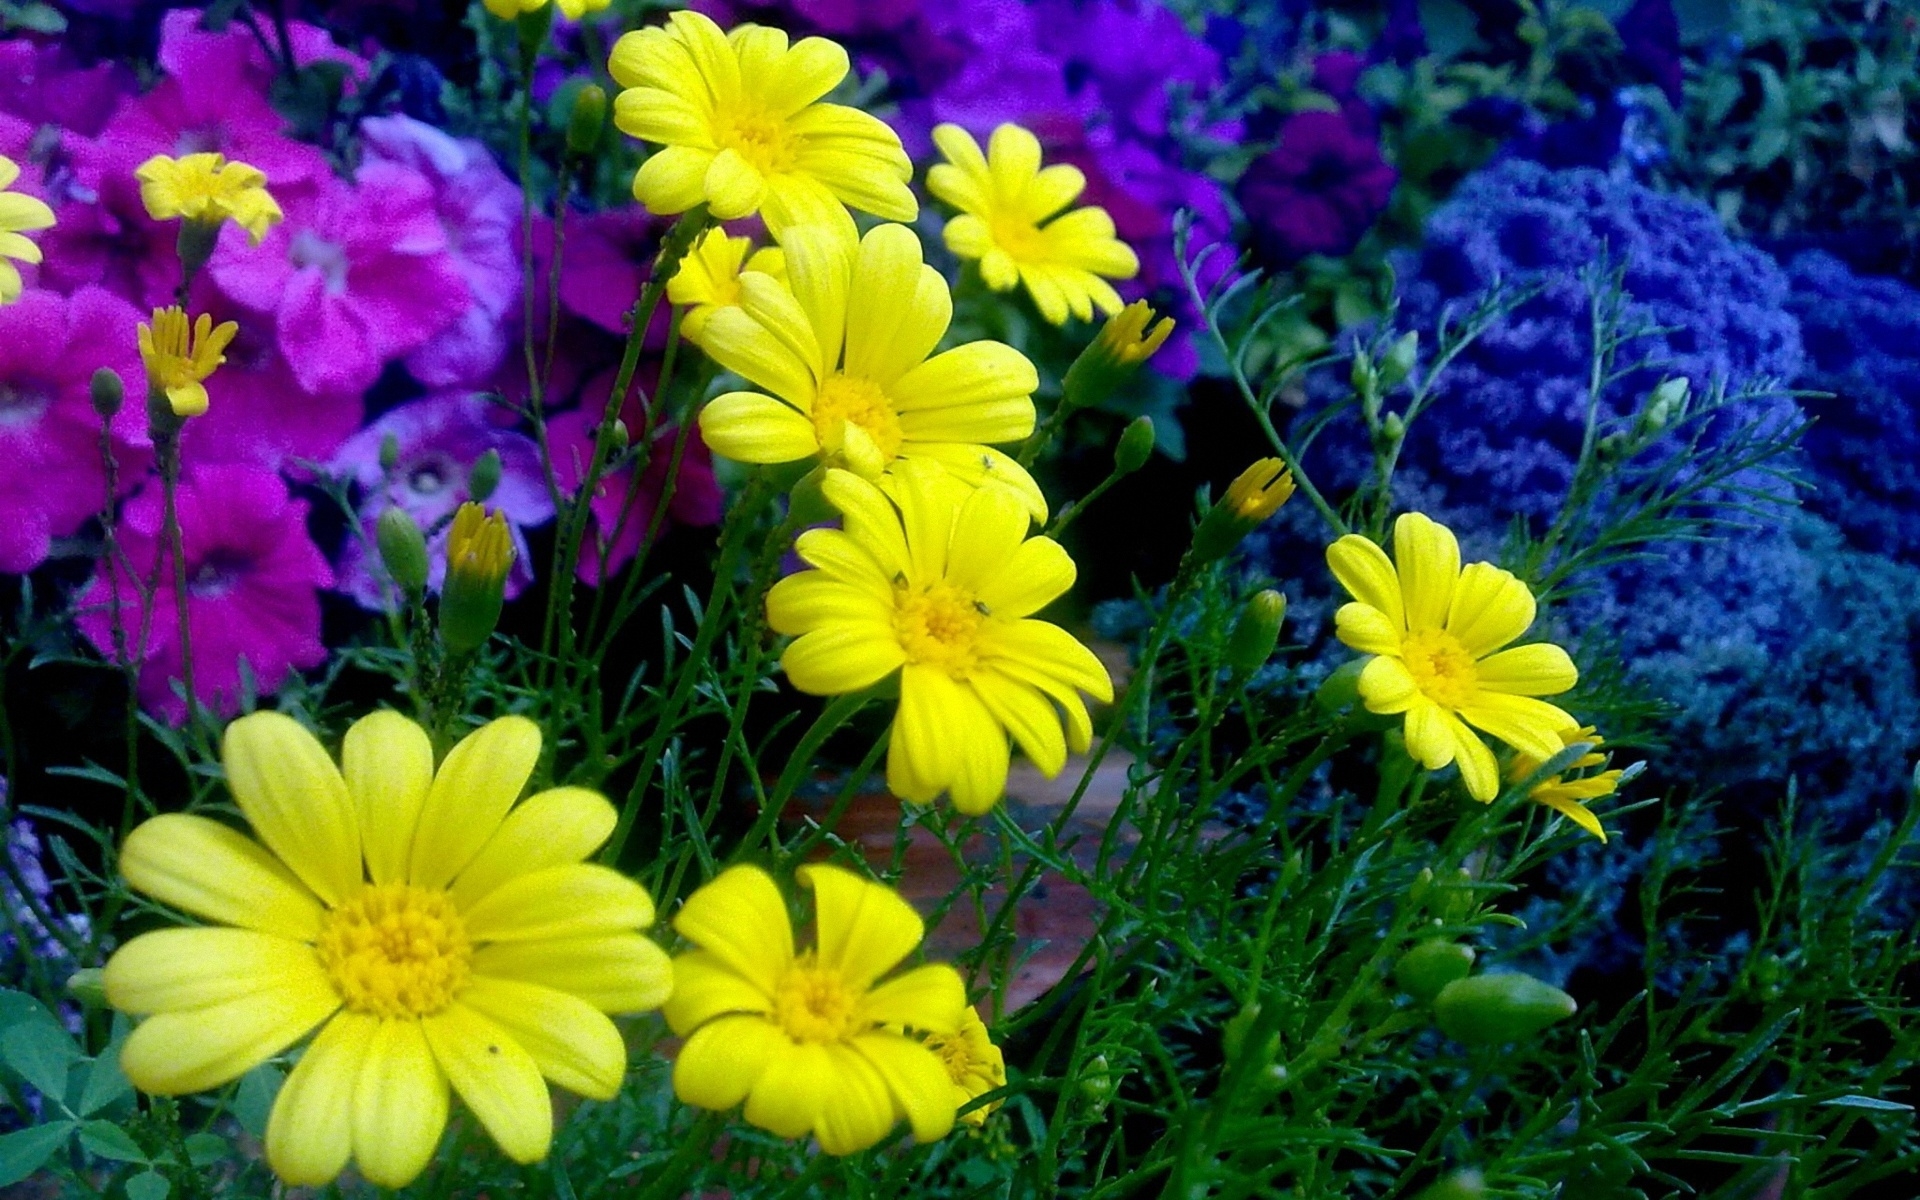 Скачать обои бесплатно Цветок, Желтый Цветок, Земля/природа, Дейзи, Флауэрсы картинка на рабочий стол ПК